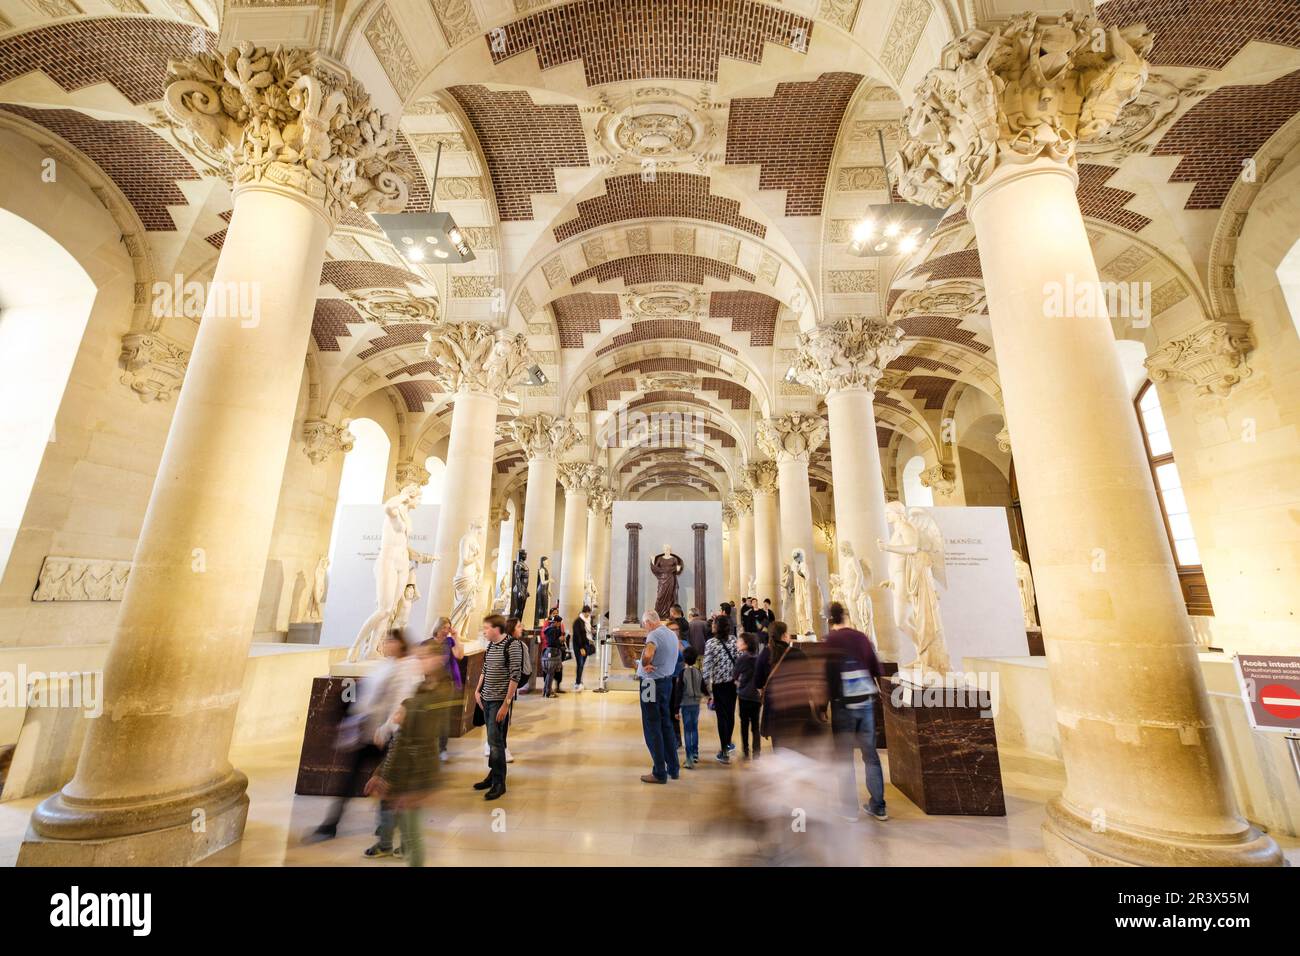 Museo del Louvre,museo nacional de Francia, Paris, France,Western Europe. Stock Photo